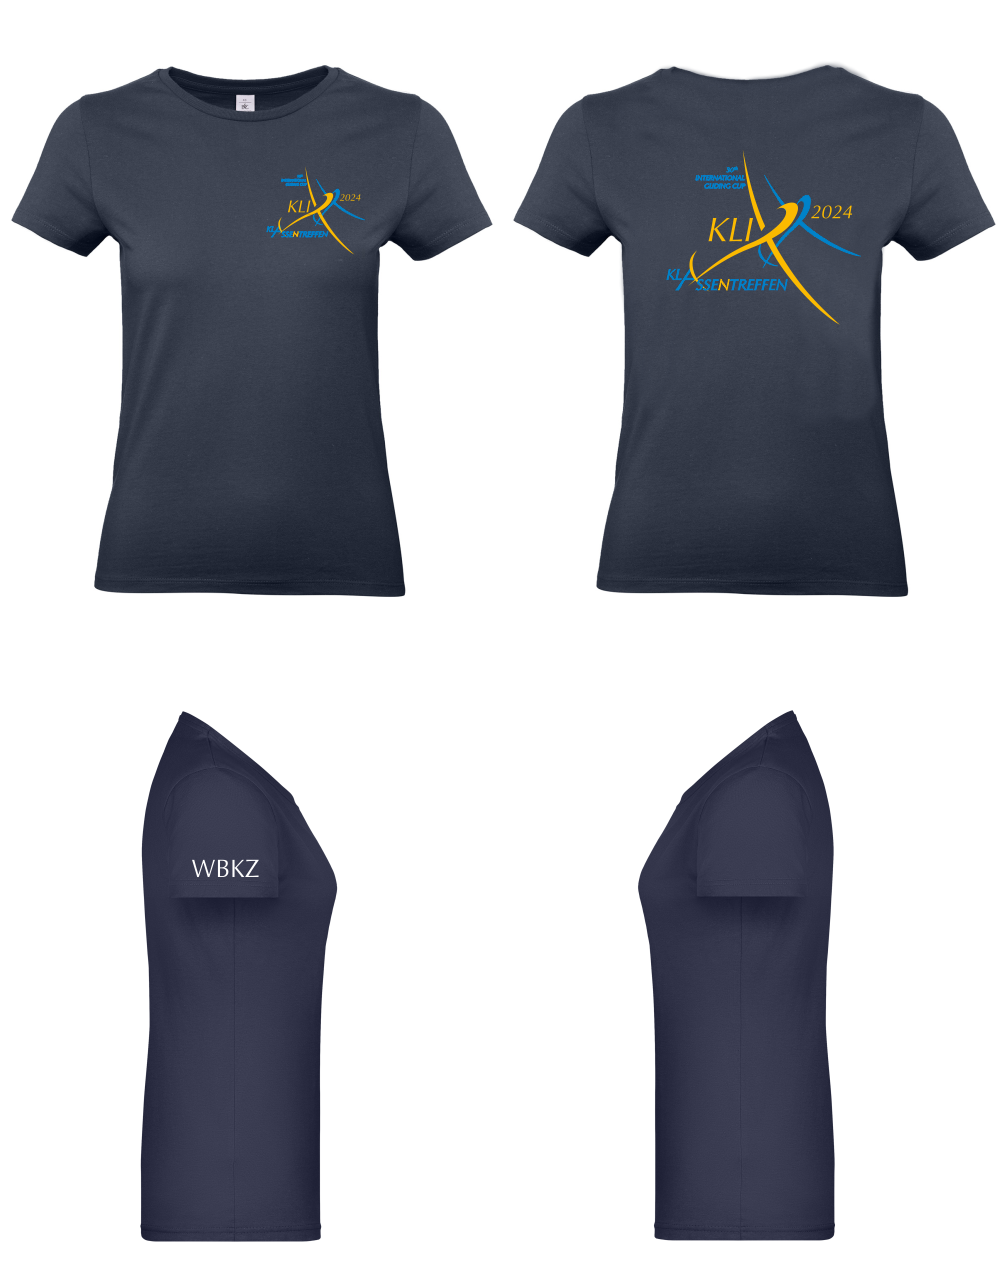 Damen T-Shirt Klassentreffen 2024 Aeroteam Klix